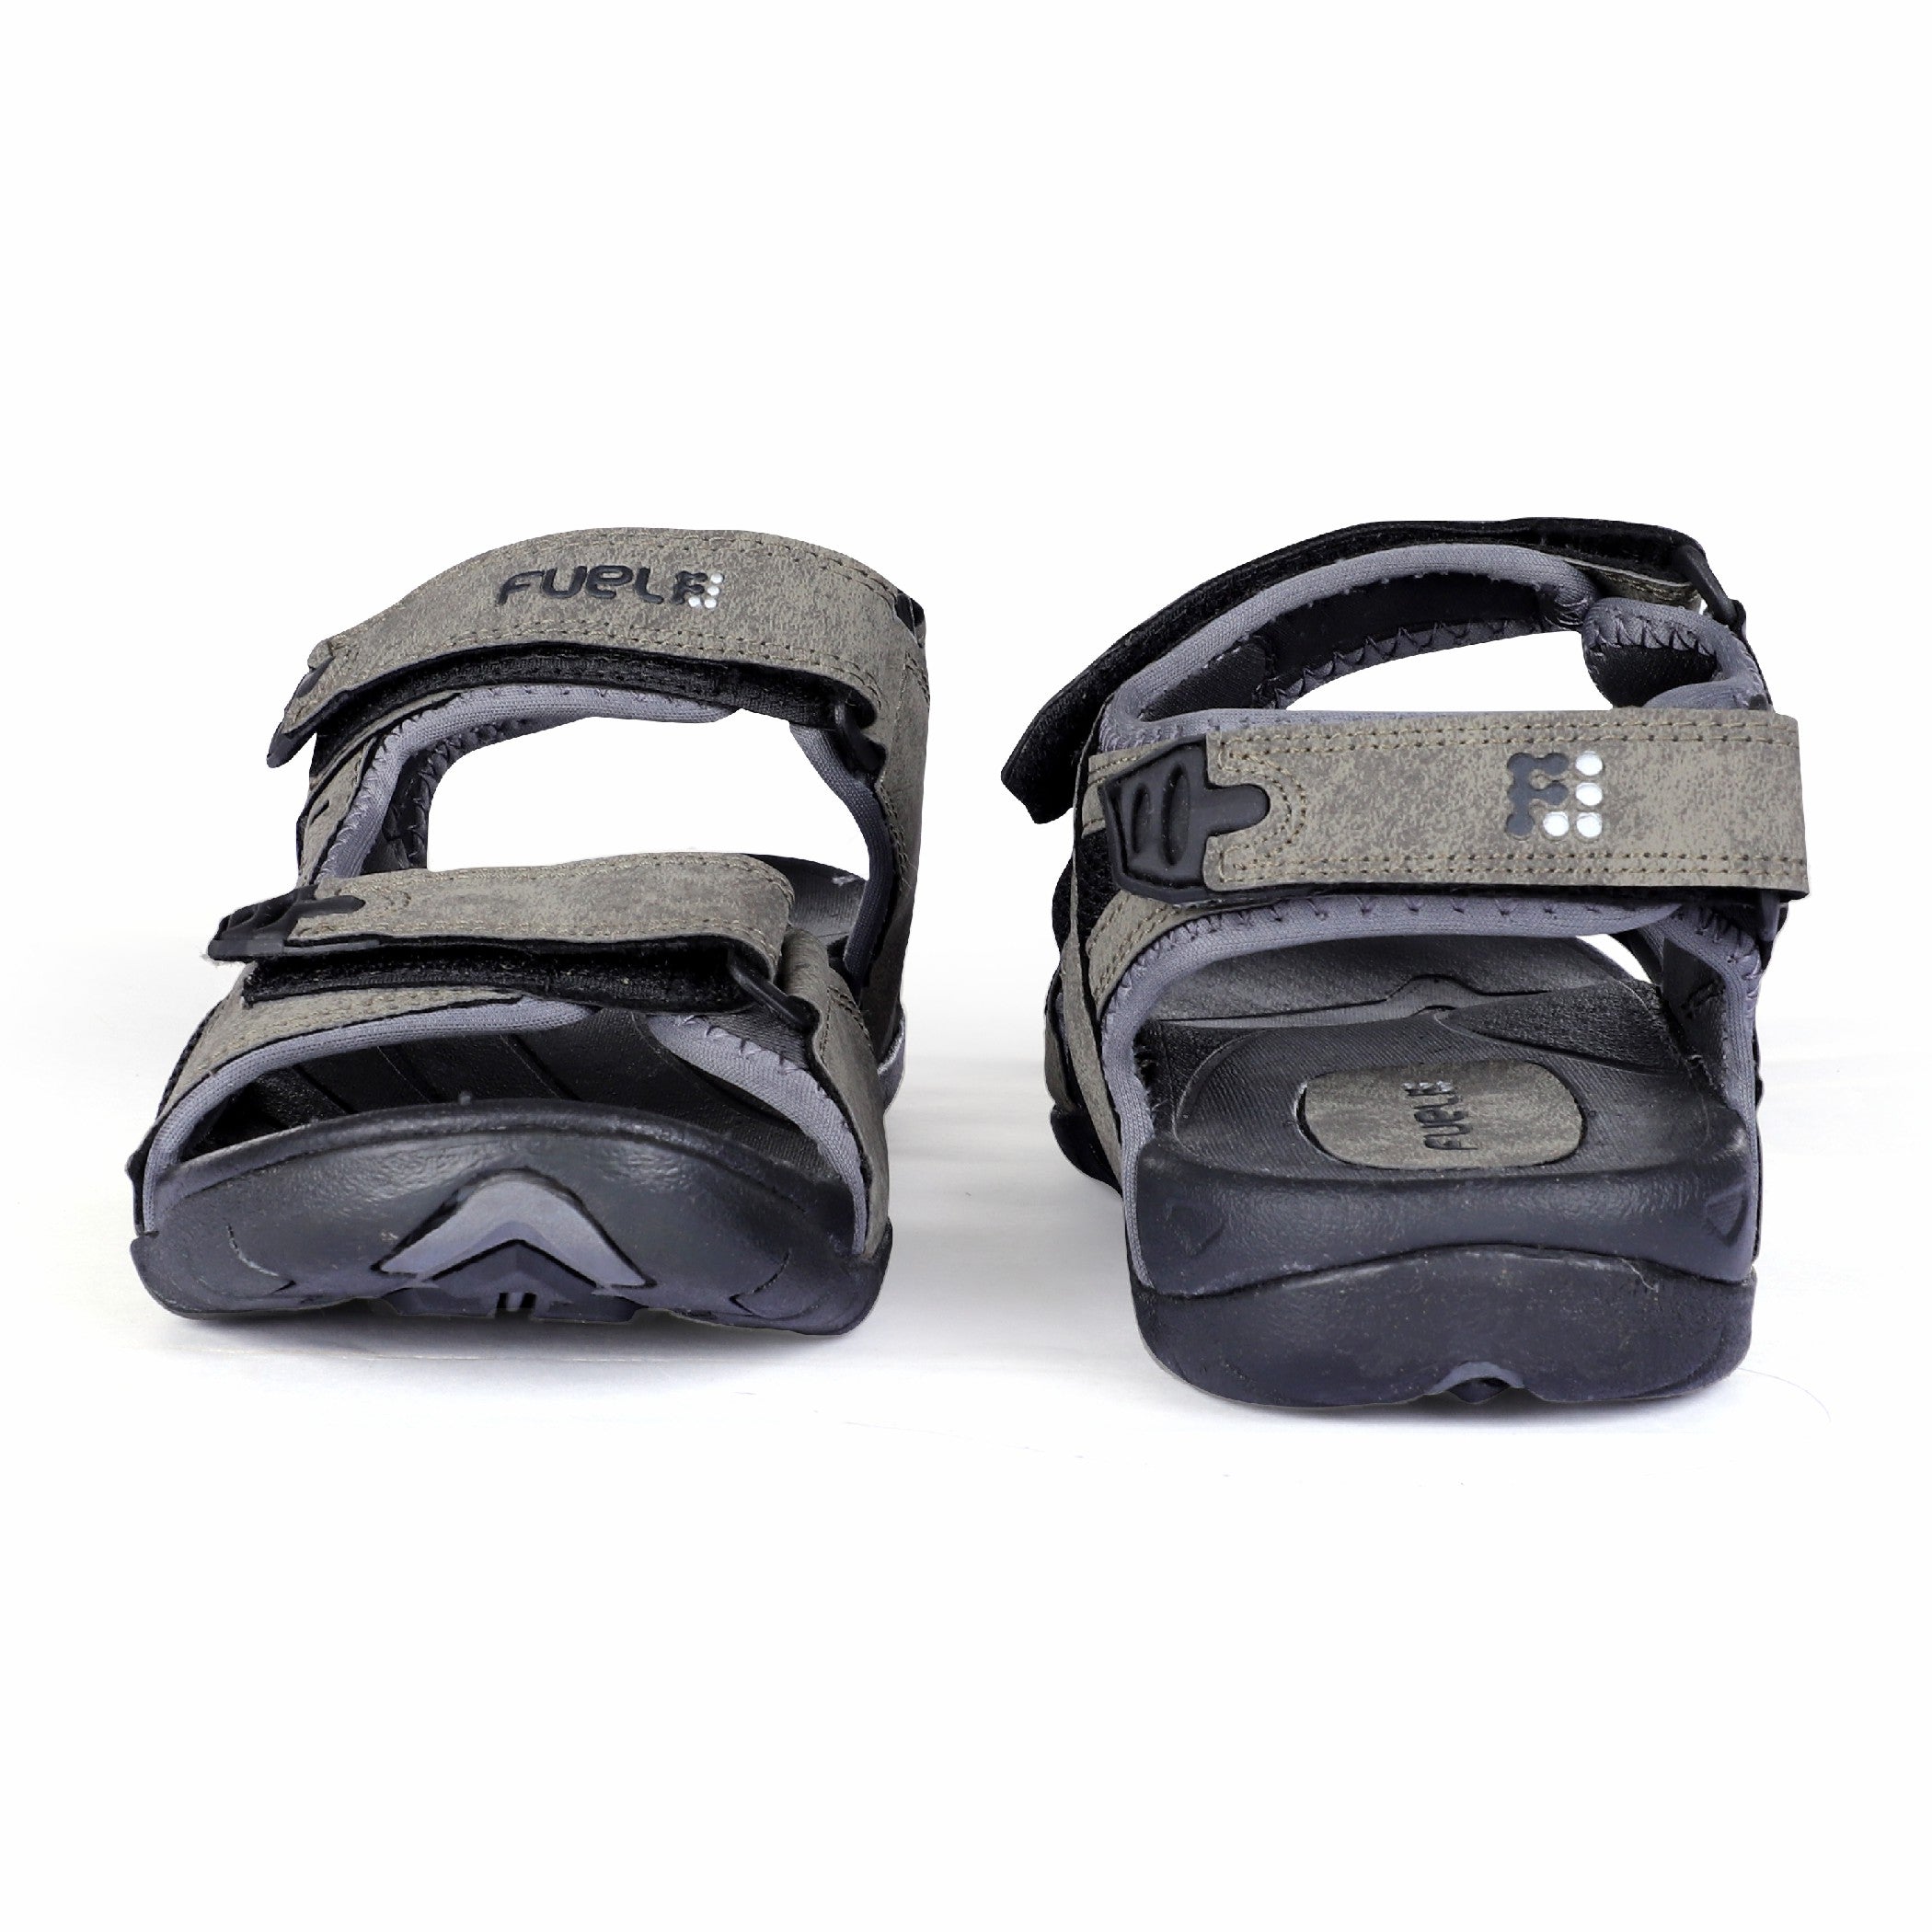 Coast | Comfortable Men's Slide Sandal | Made in USA | Okabashi Shoes